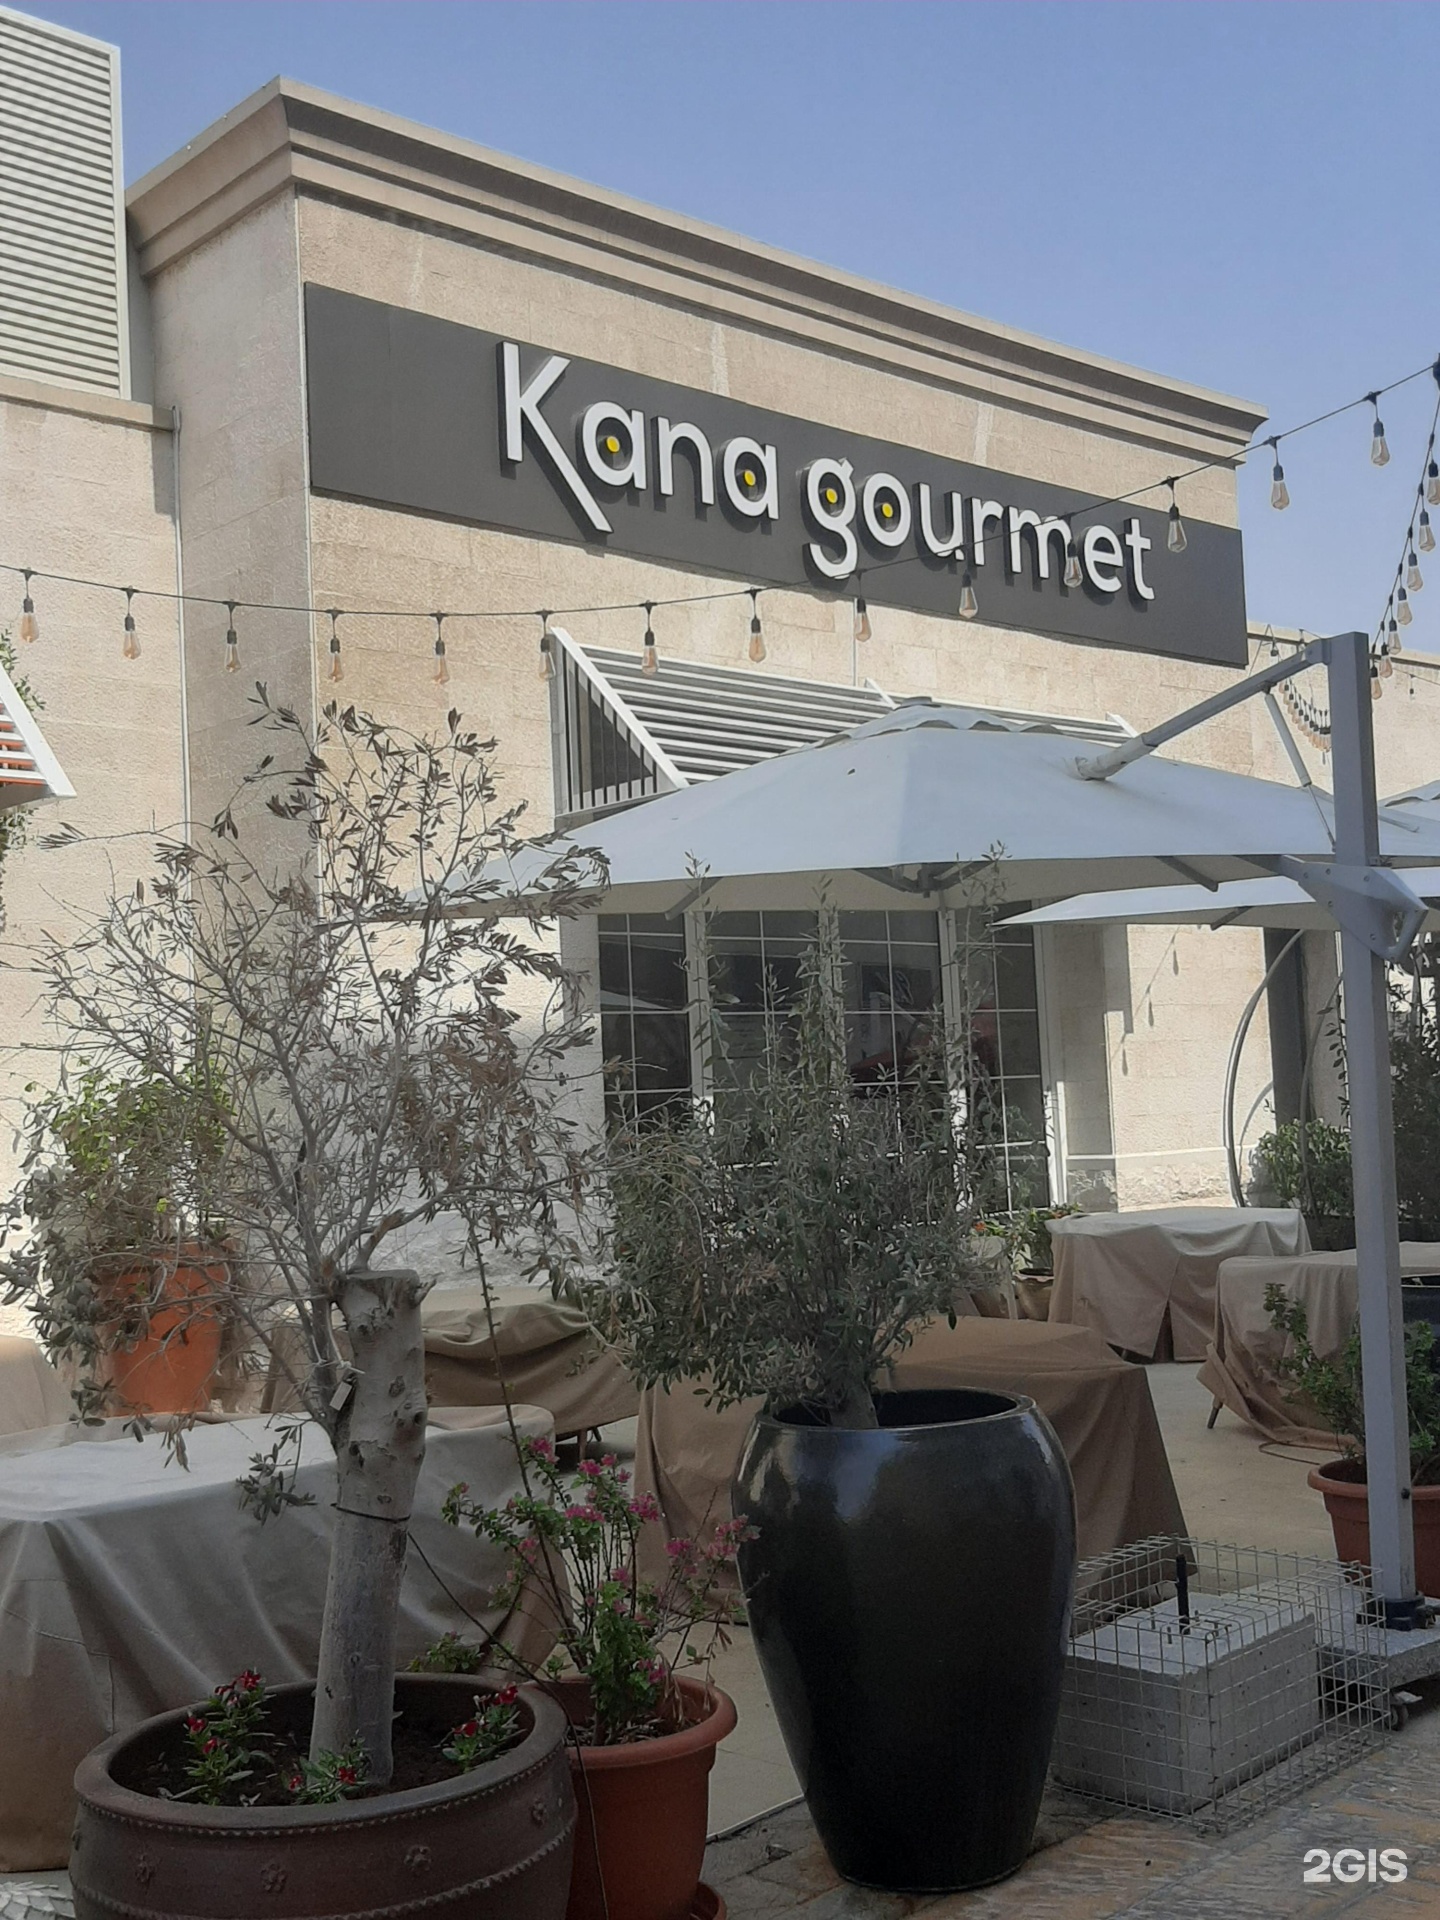 Gourmet, 2a, street, restaurant, 47 2GIS Dubai — Kana